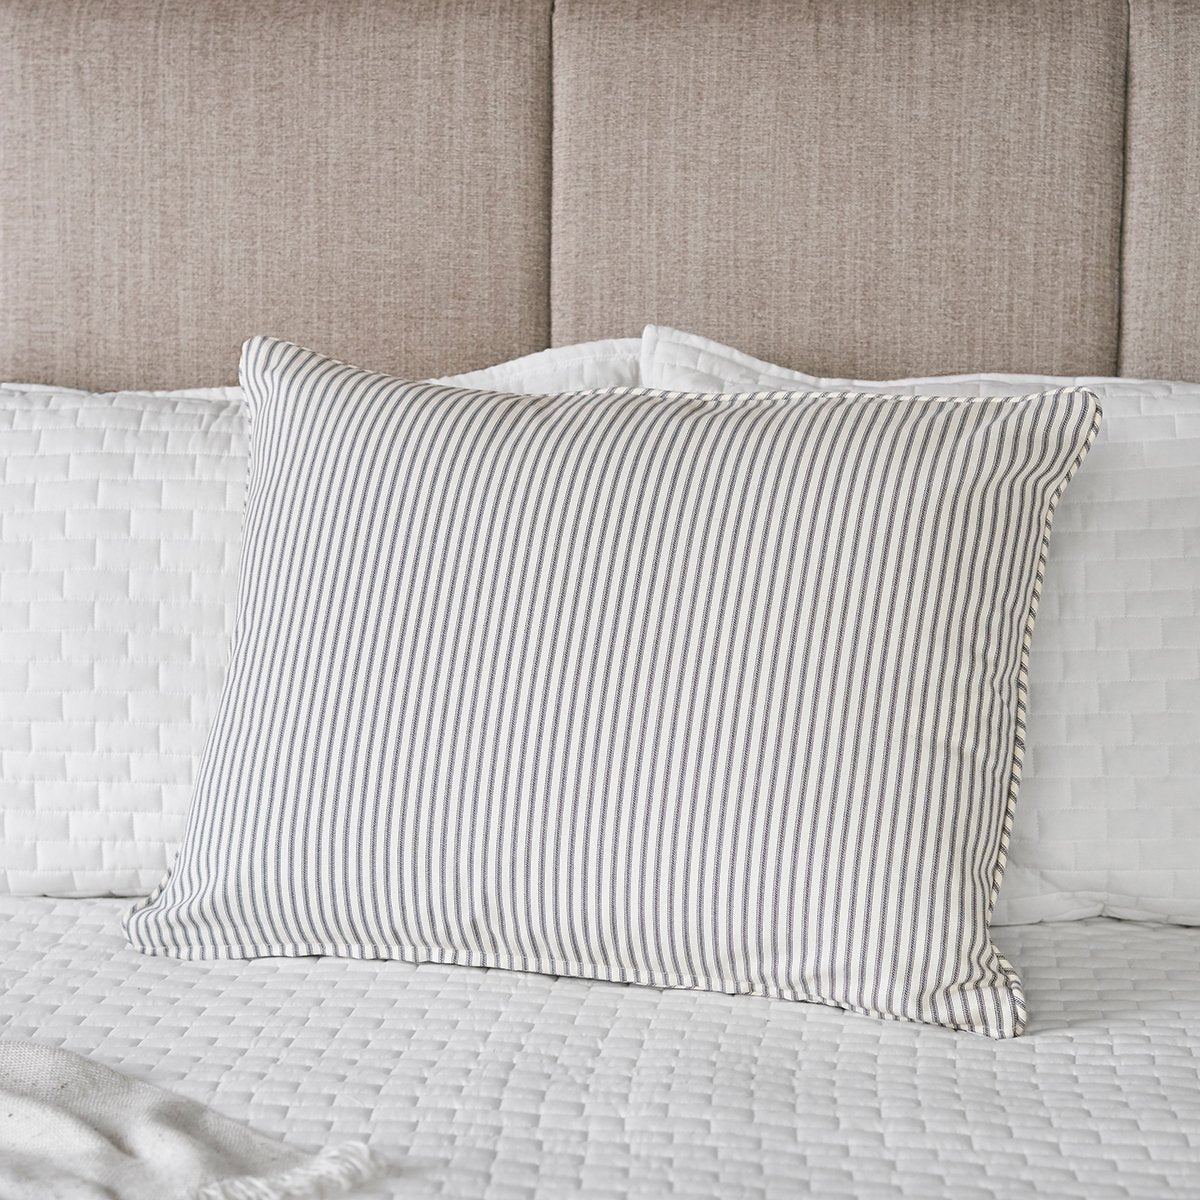 Ticking Stripe Pillow Sham |  Standard Size Gray